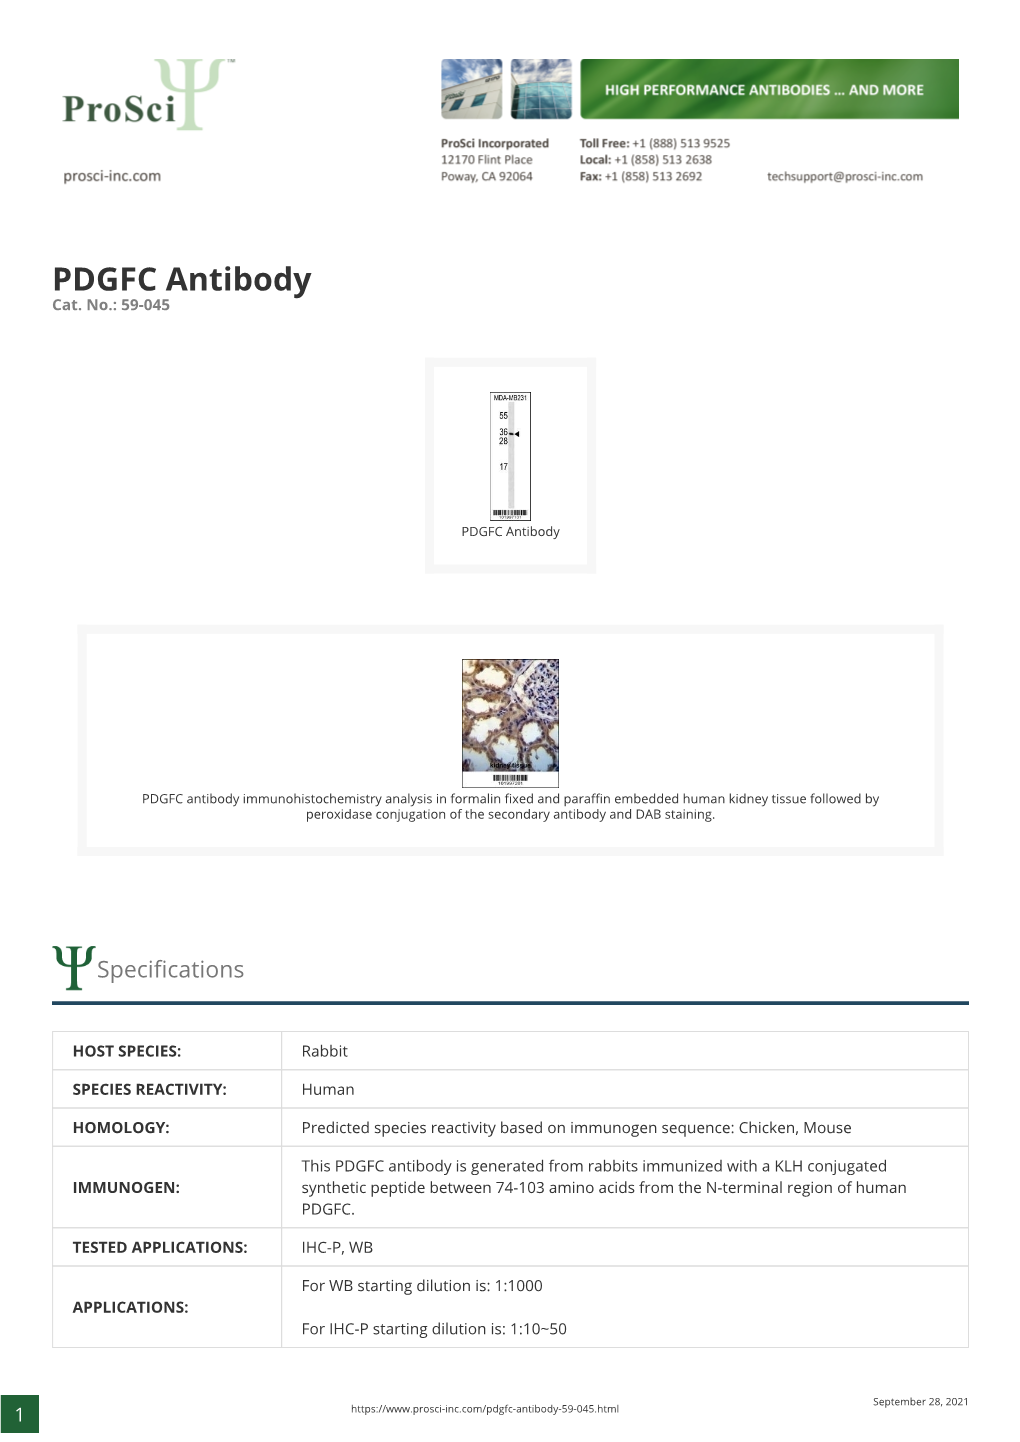 PDGFC Antibody Cat